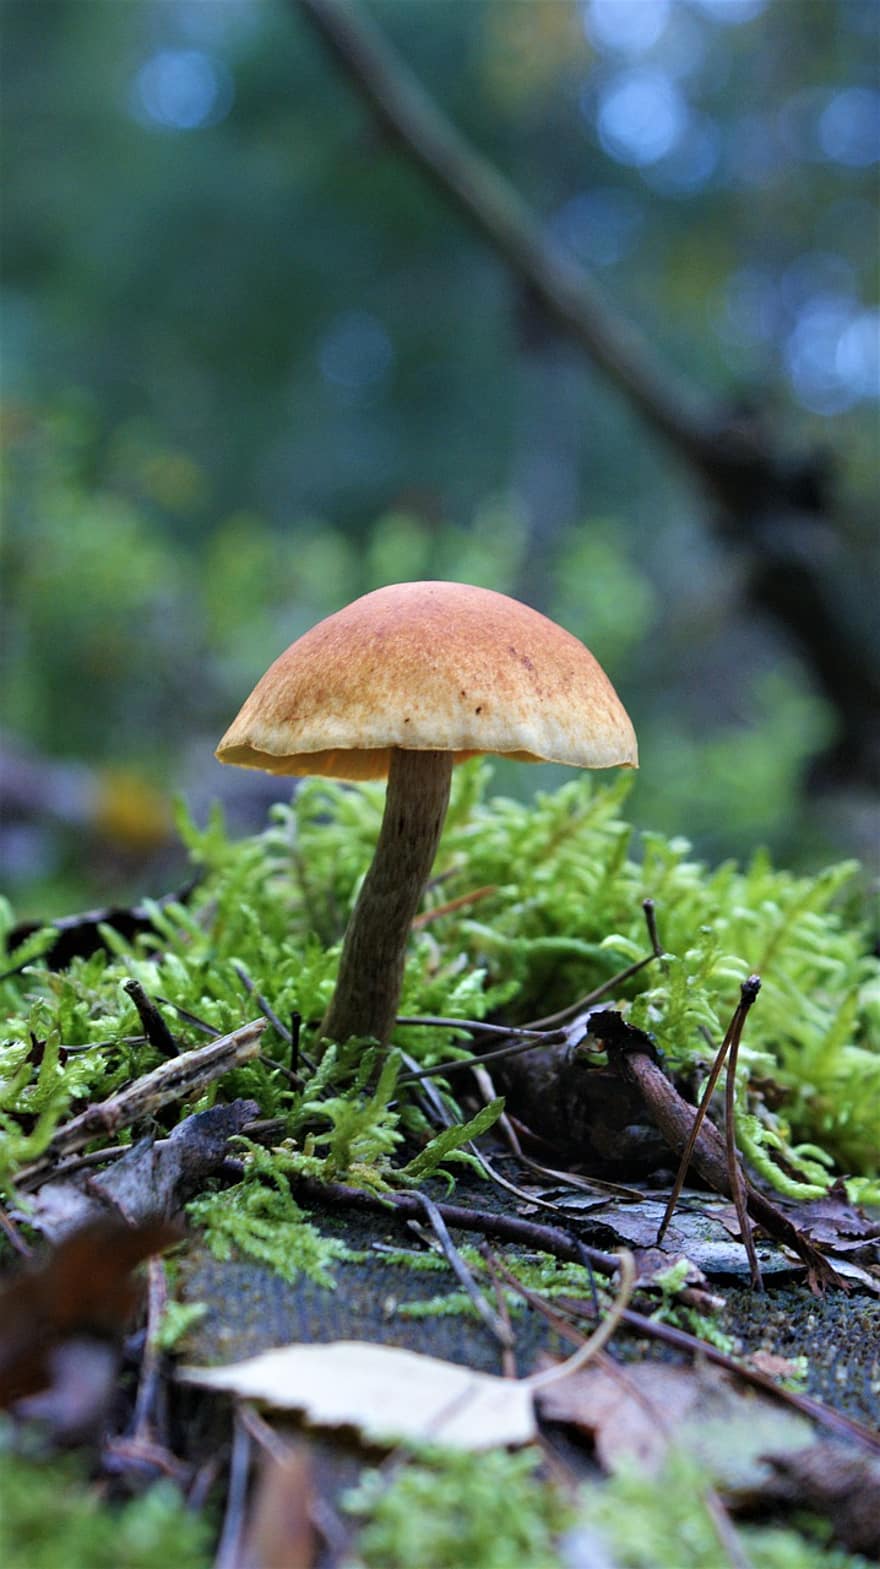 Mushroom, Wild Mushroom, Spore, Sponge, Fungus, Fruiting Body, Mushroom Disks, Fungal Species, Mushroom Species, Forest, Forest Floor